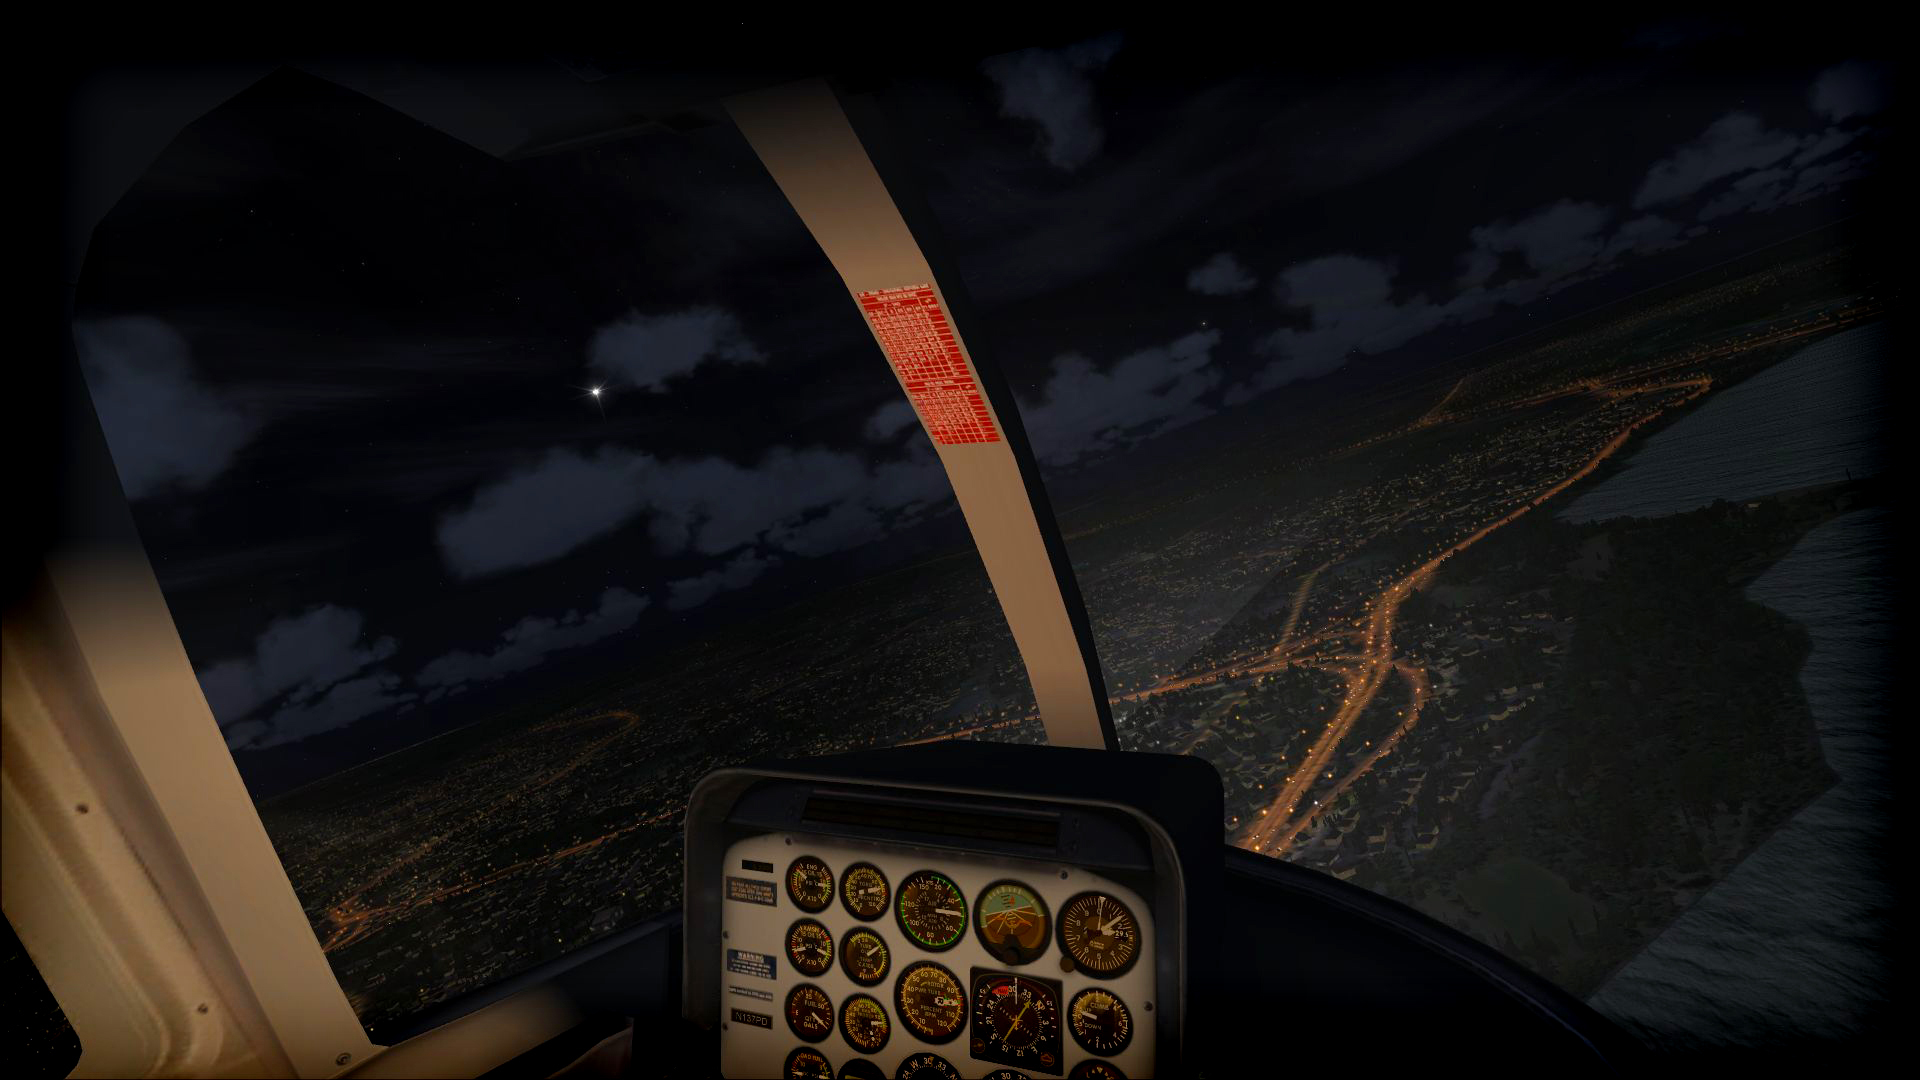 Microsoft Flight Simulator X: Steam Edition Gets “Dangerous Approaches” DLC